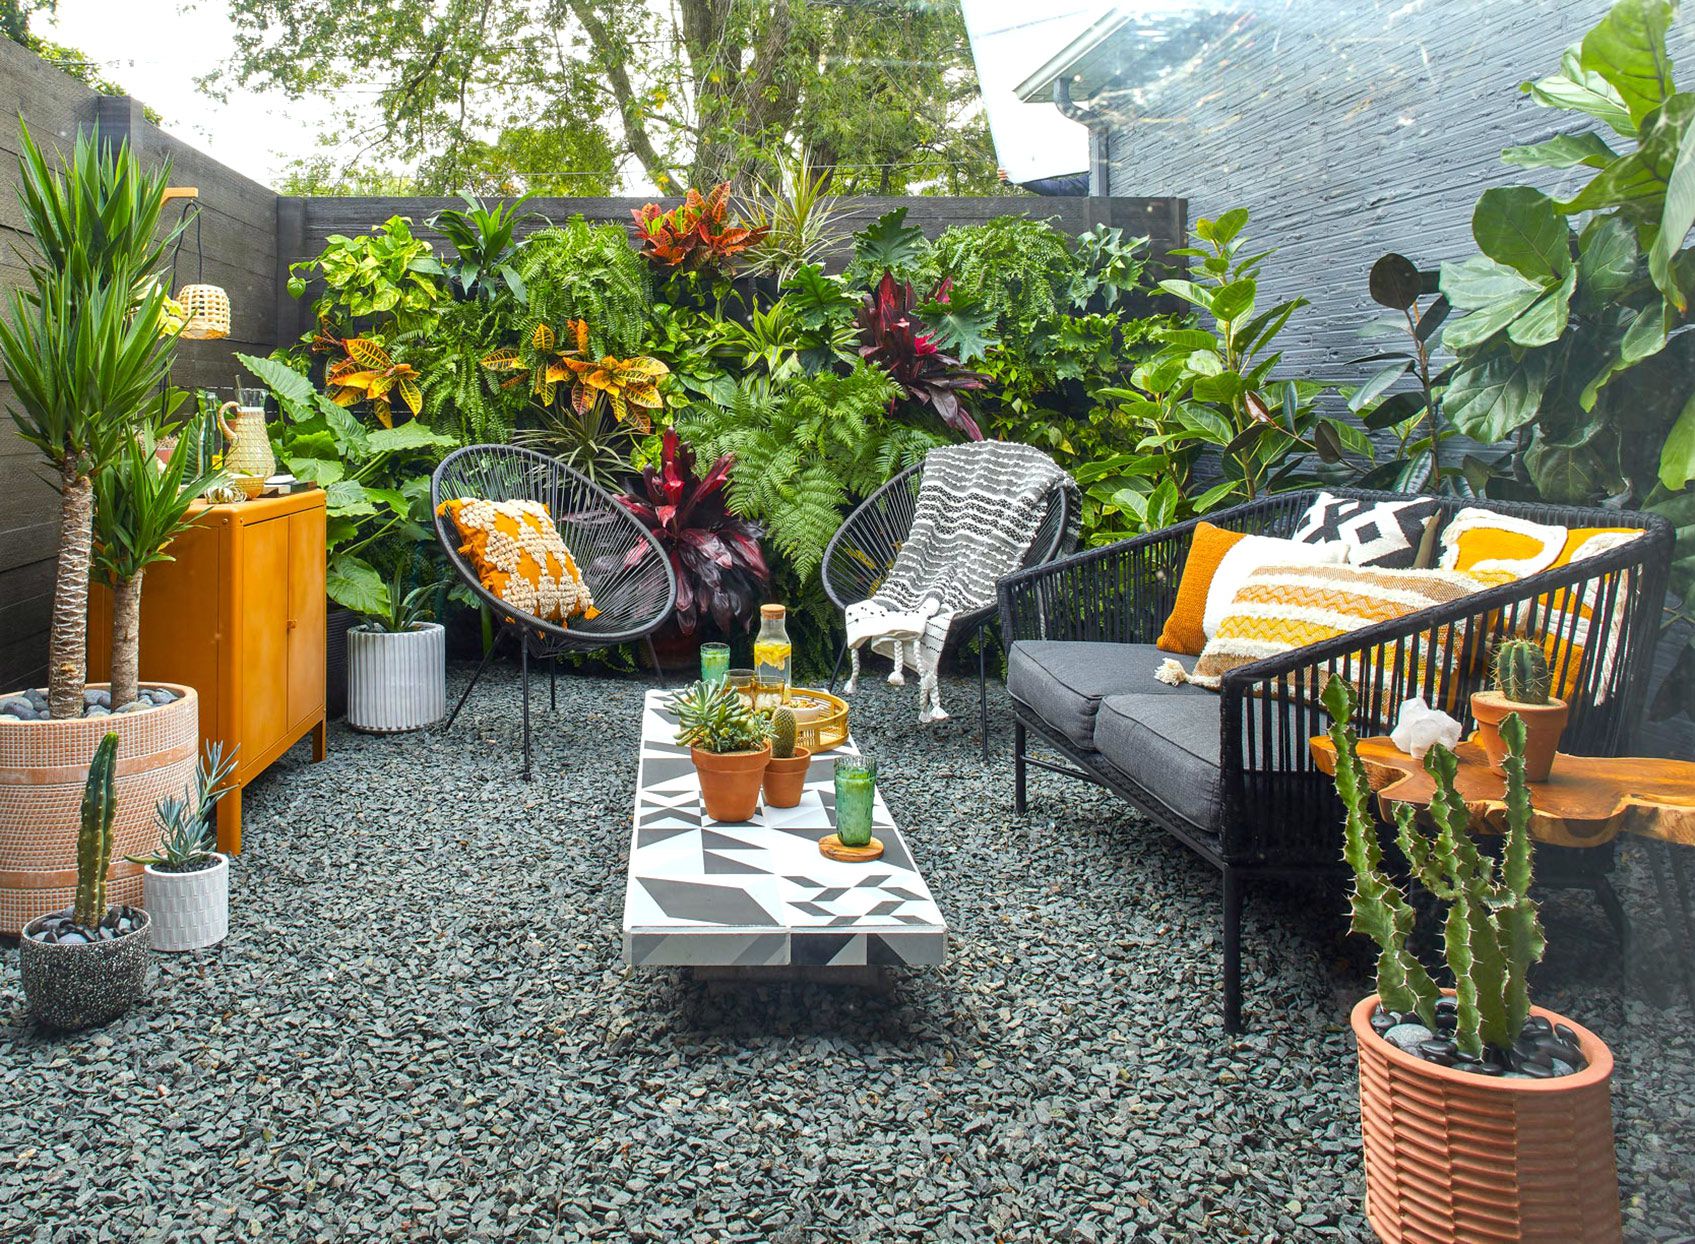 How do you make a small patio look tropical